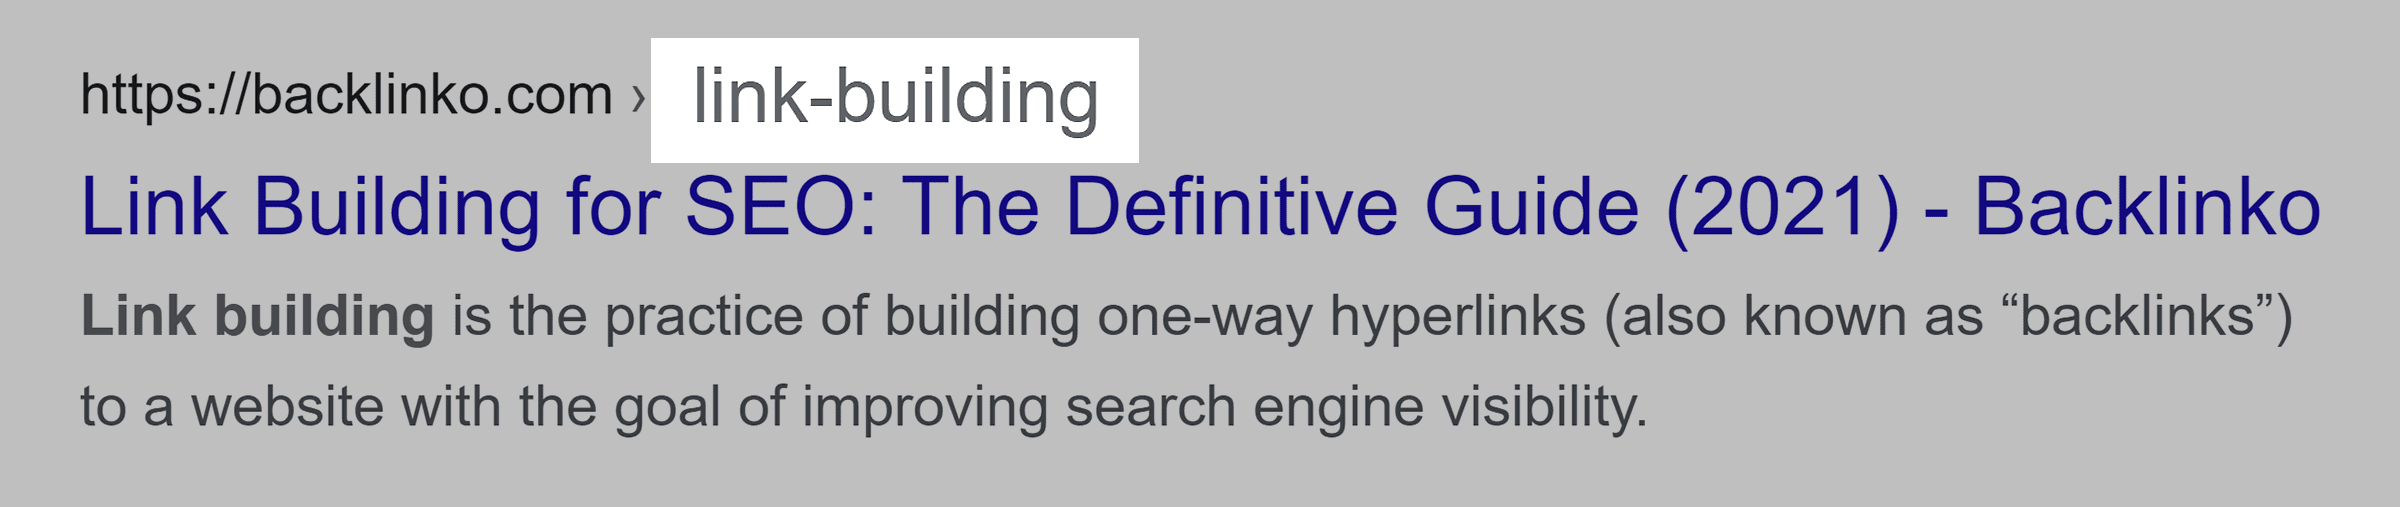 Google SERP – "Link building" in URL